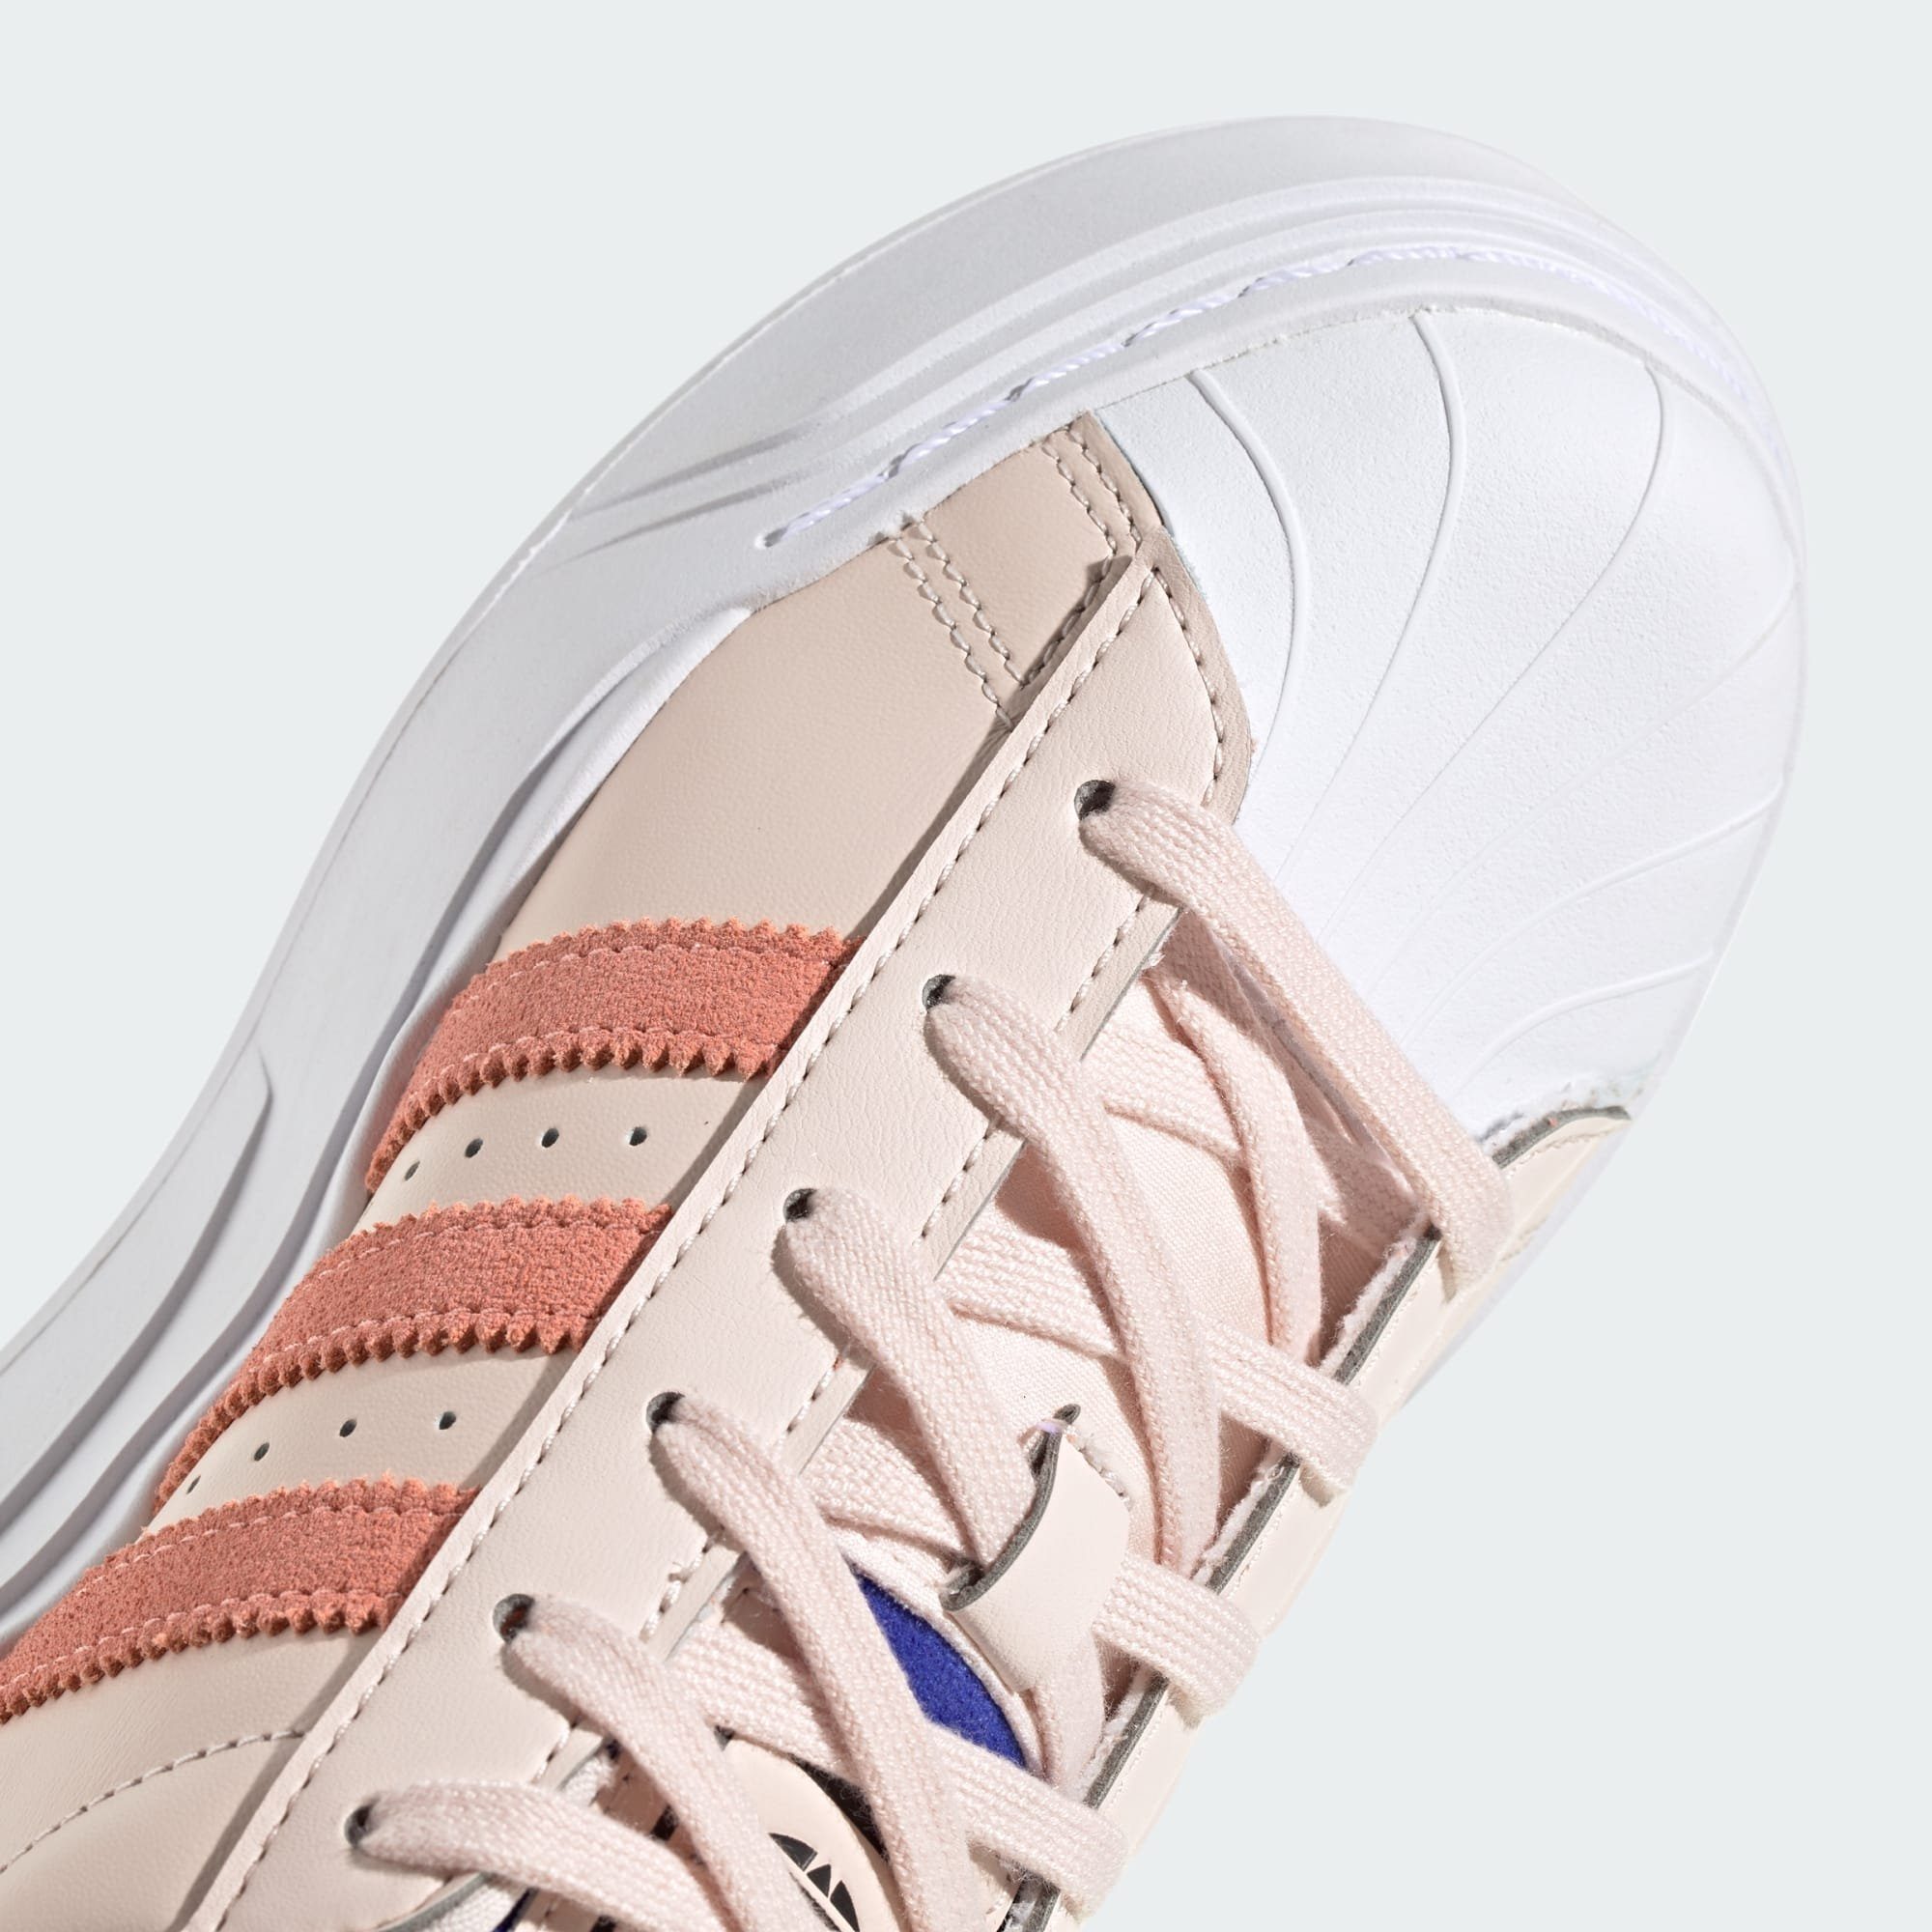 2B SCHUH BONEGA SUPERSTAR adidas Originals Sneaker